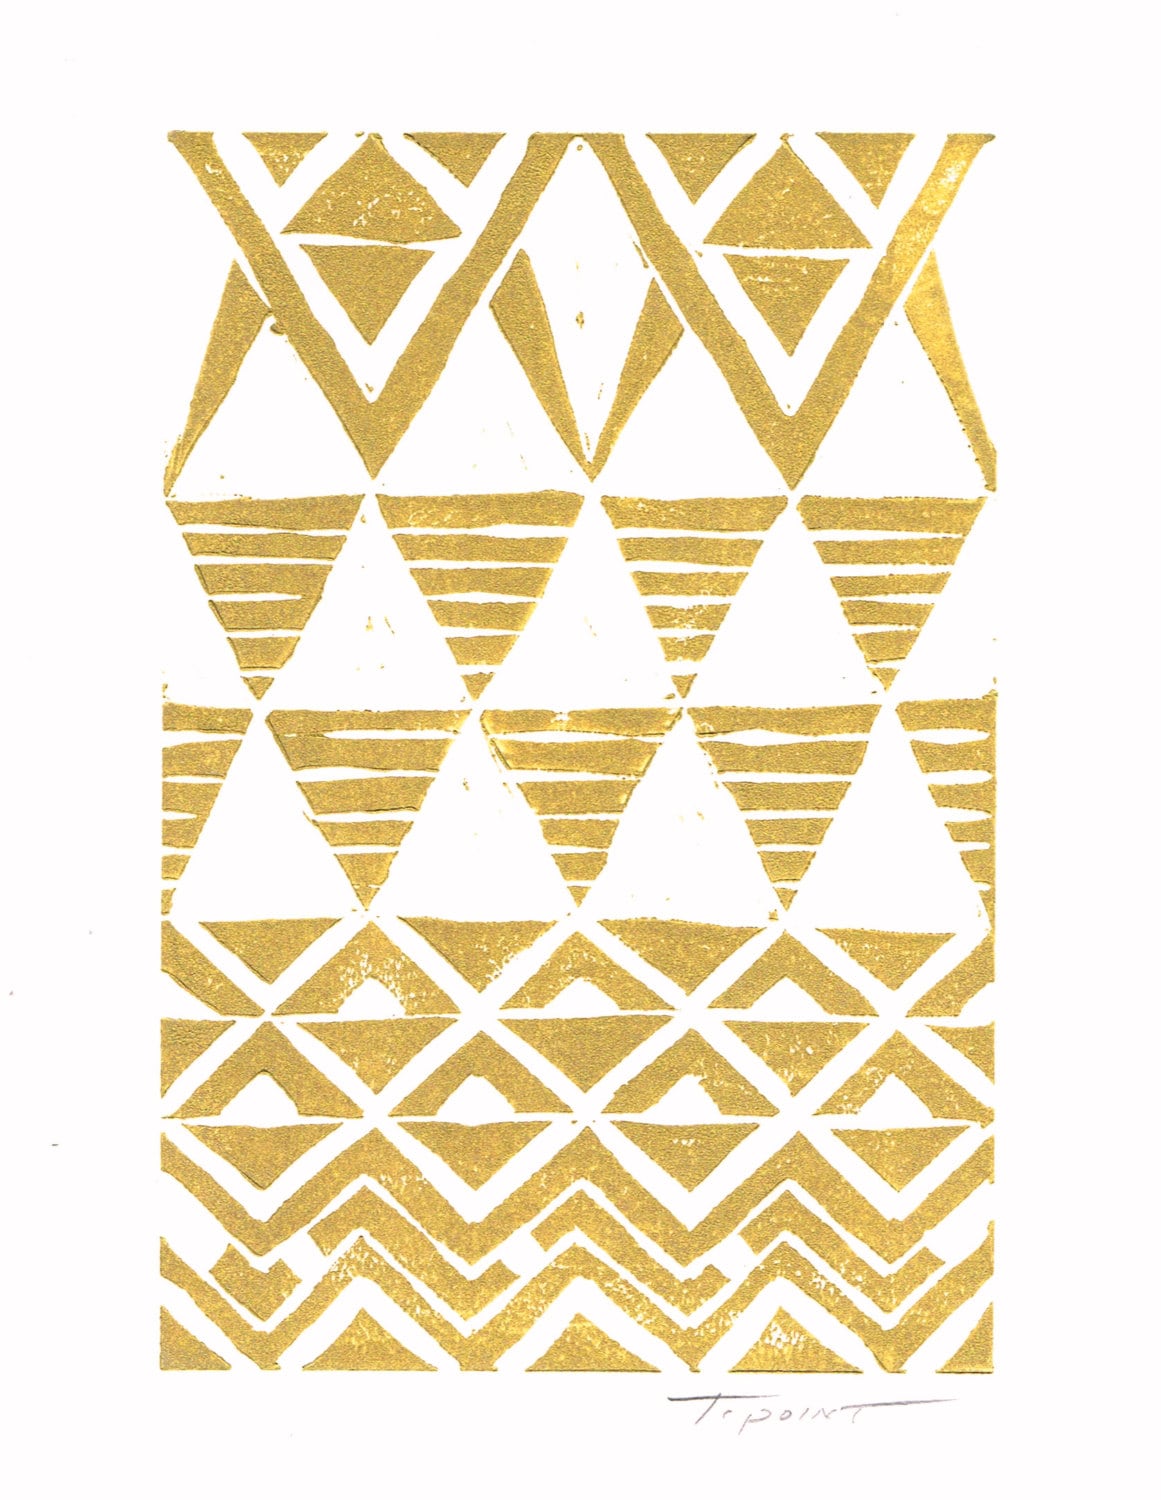 SALE Print Tribal Triangles Pattern Linocut / 4 x 6 by printwork